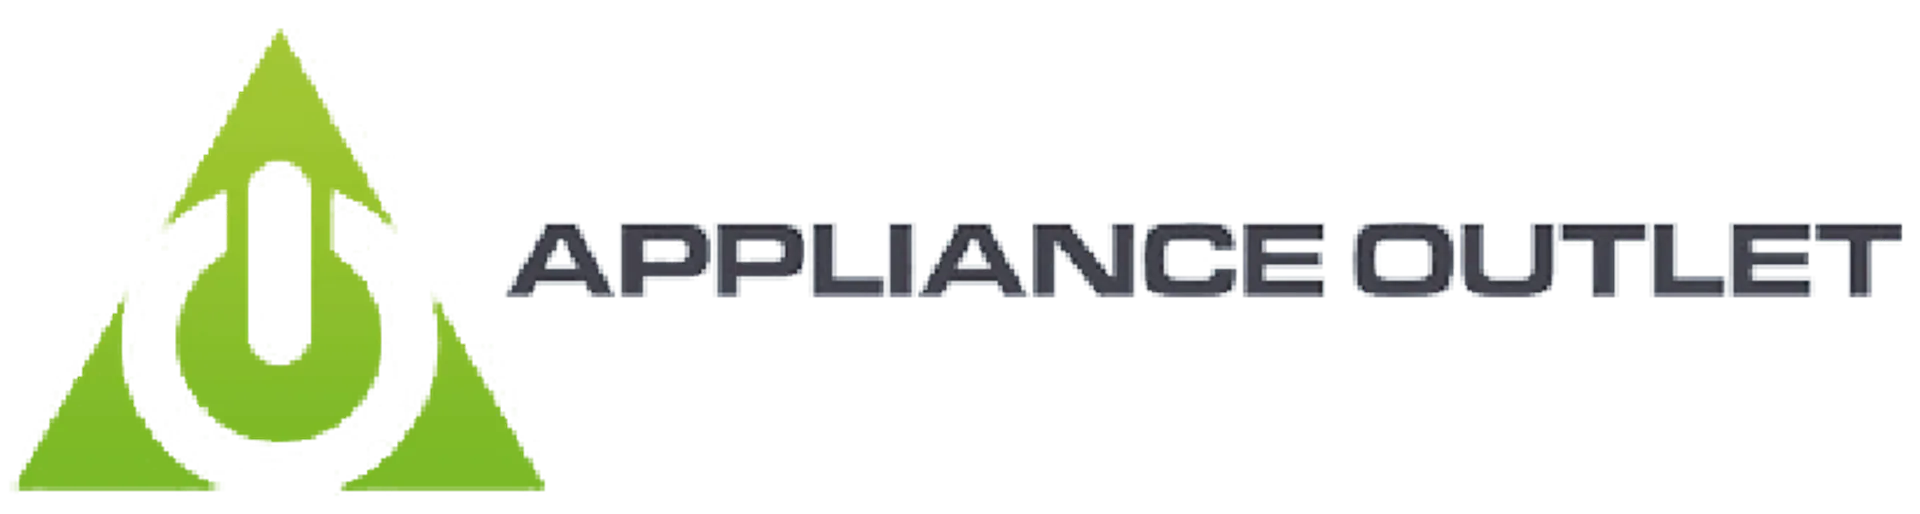  APPLIANCE OUTLET logo